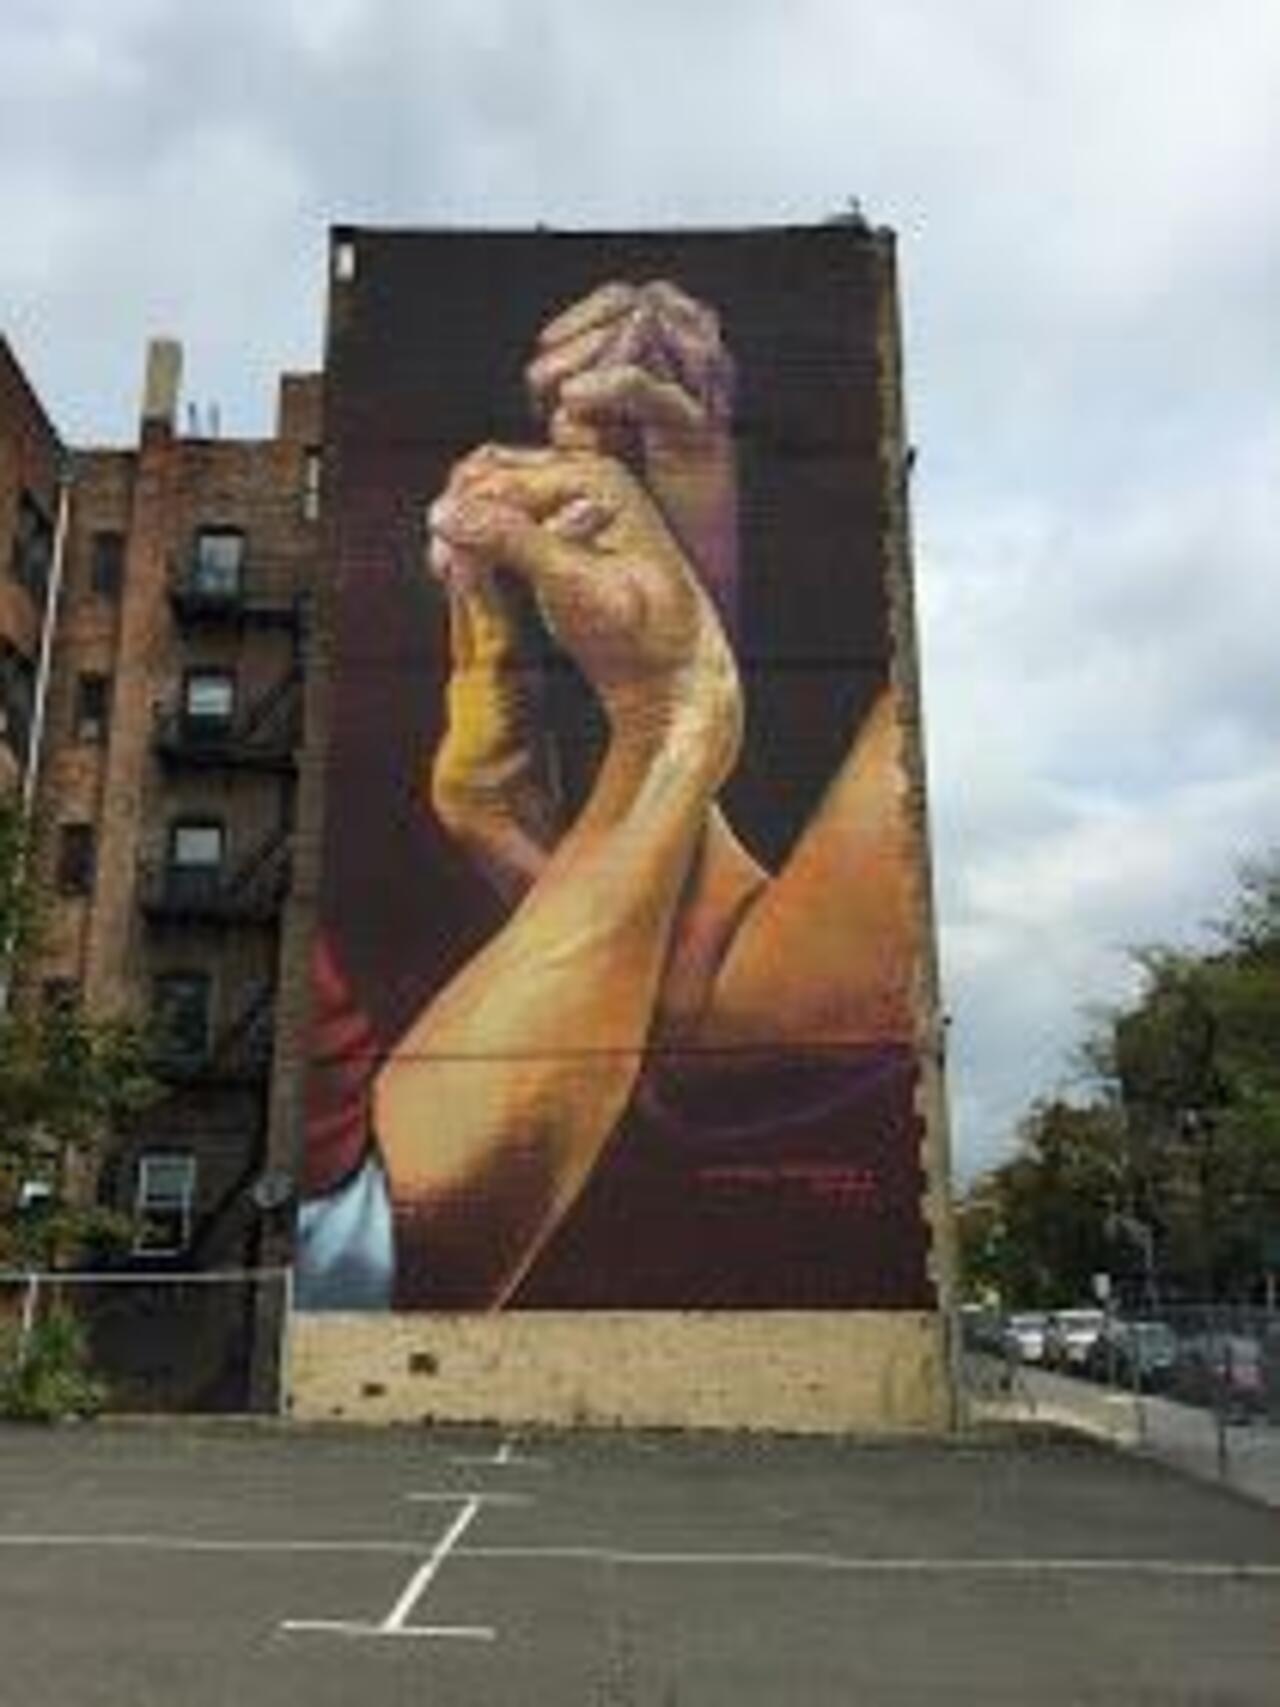 RT @AuKeats: #new #streetart by #Case #Jersey City, #USA #switch #graffiti #bedifferent #art #arte http://t.co/GwjVEbiTo8